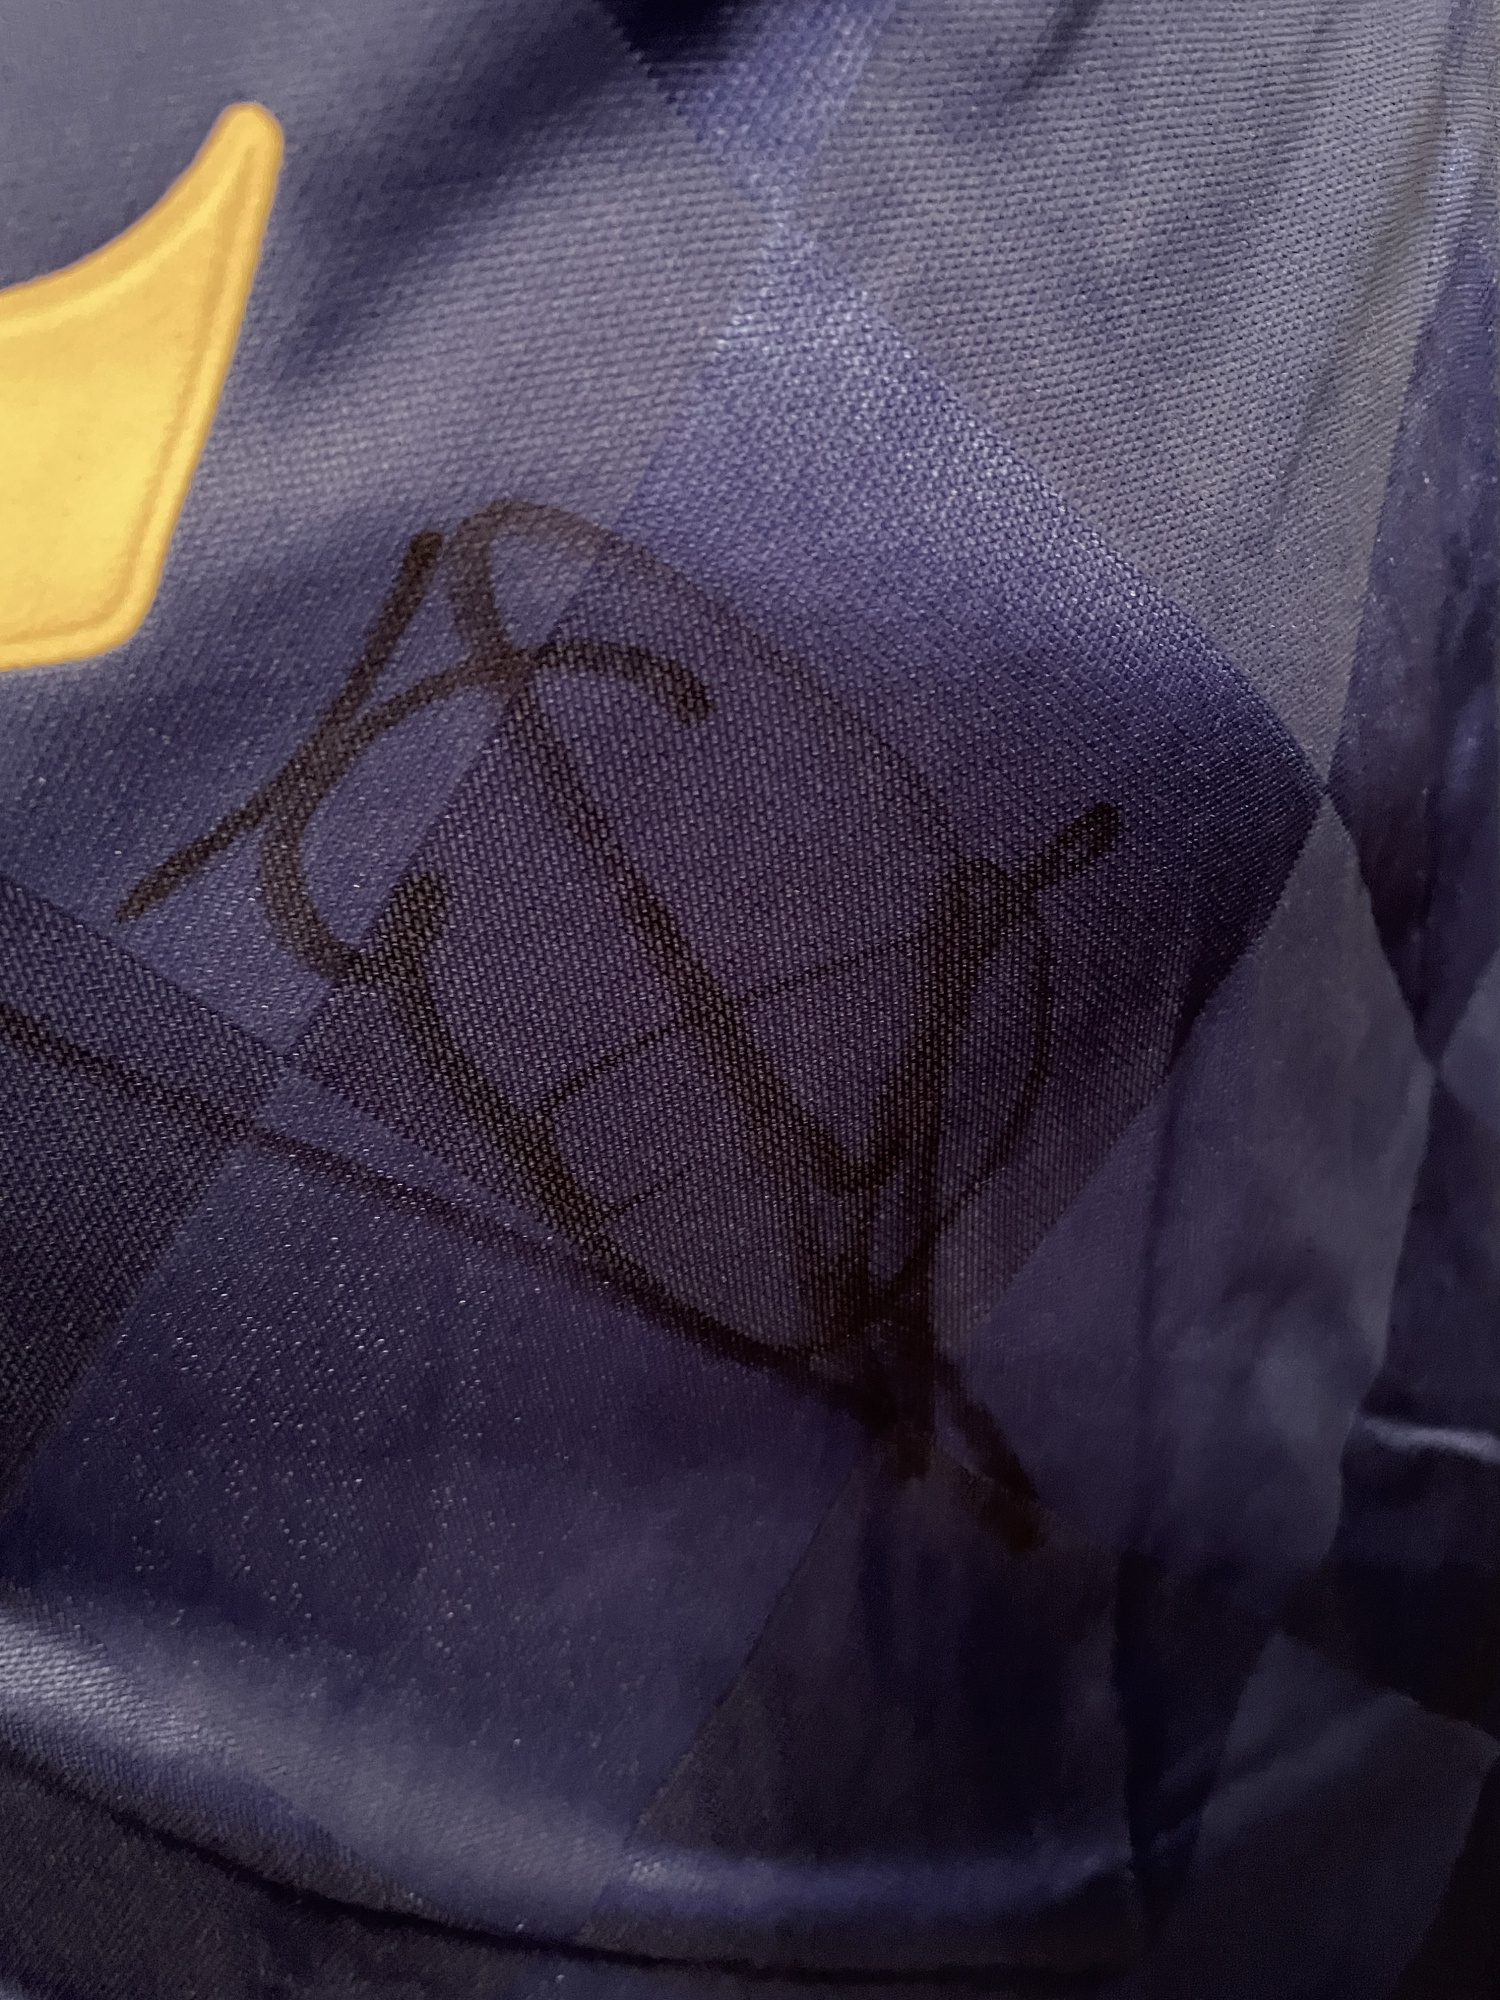 Signed Kevin Sheedy Everton 1986-89 Shirt - Its Signed Memorabilia